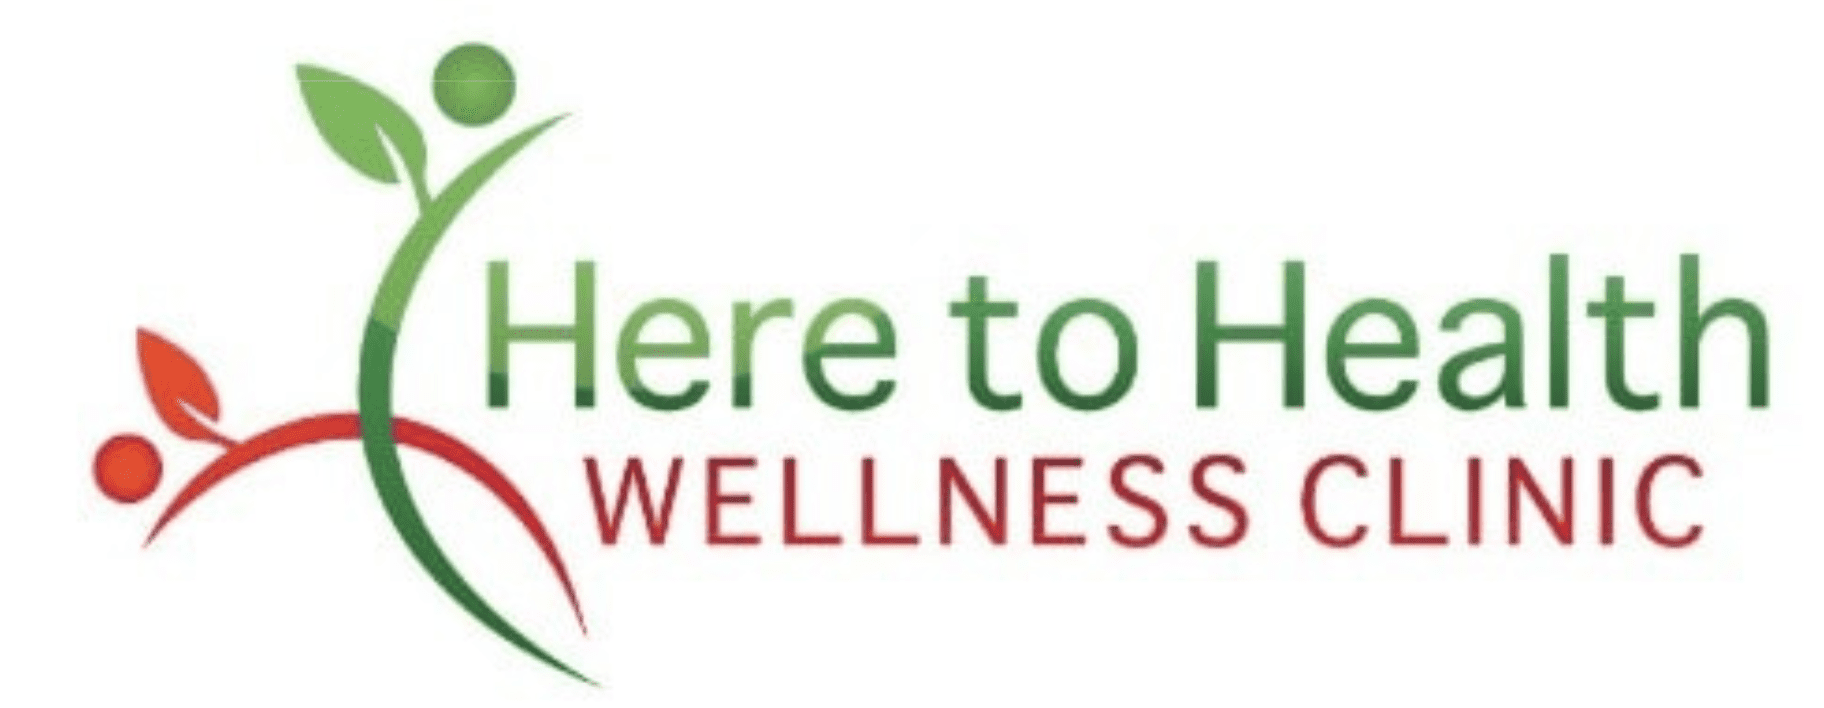 Here to Health Wellness Clinic Inc